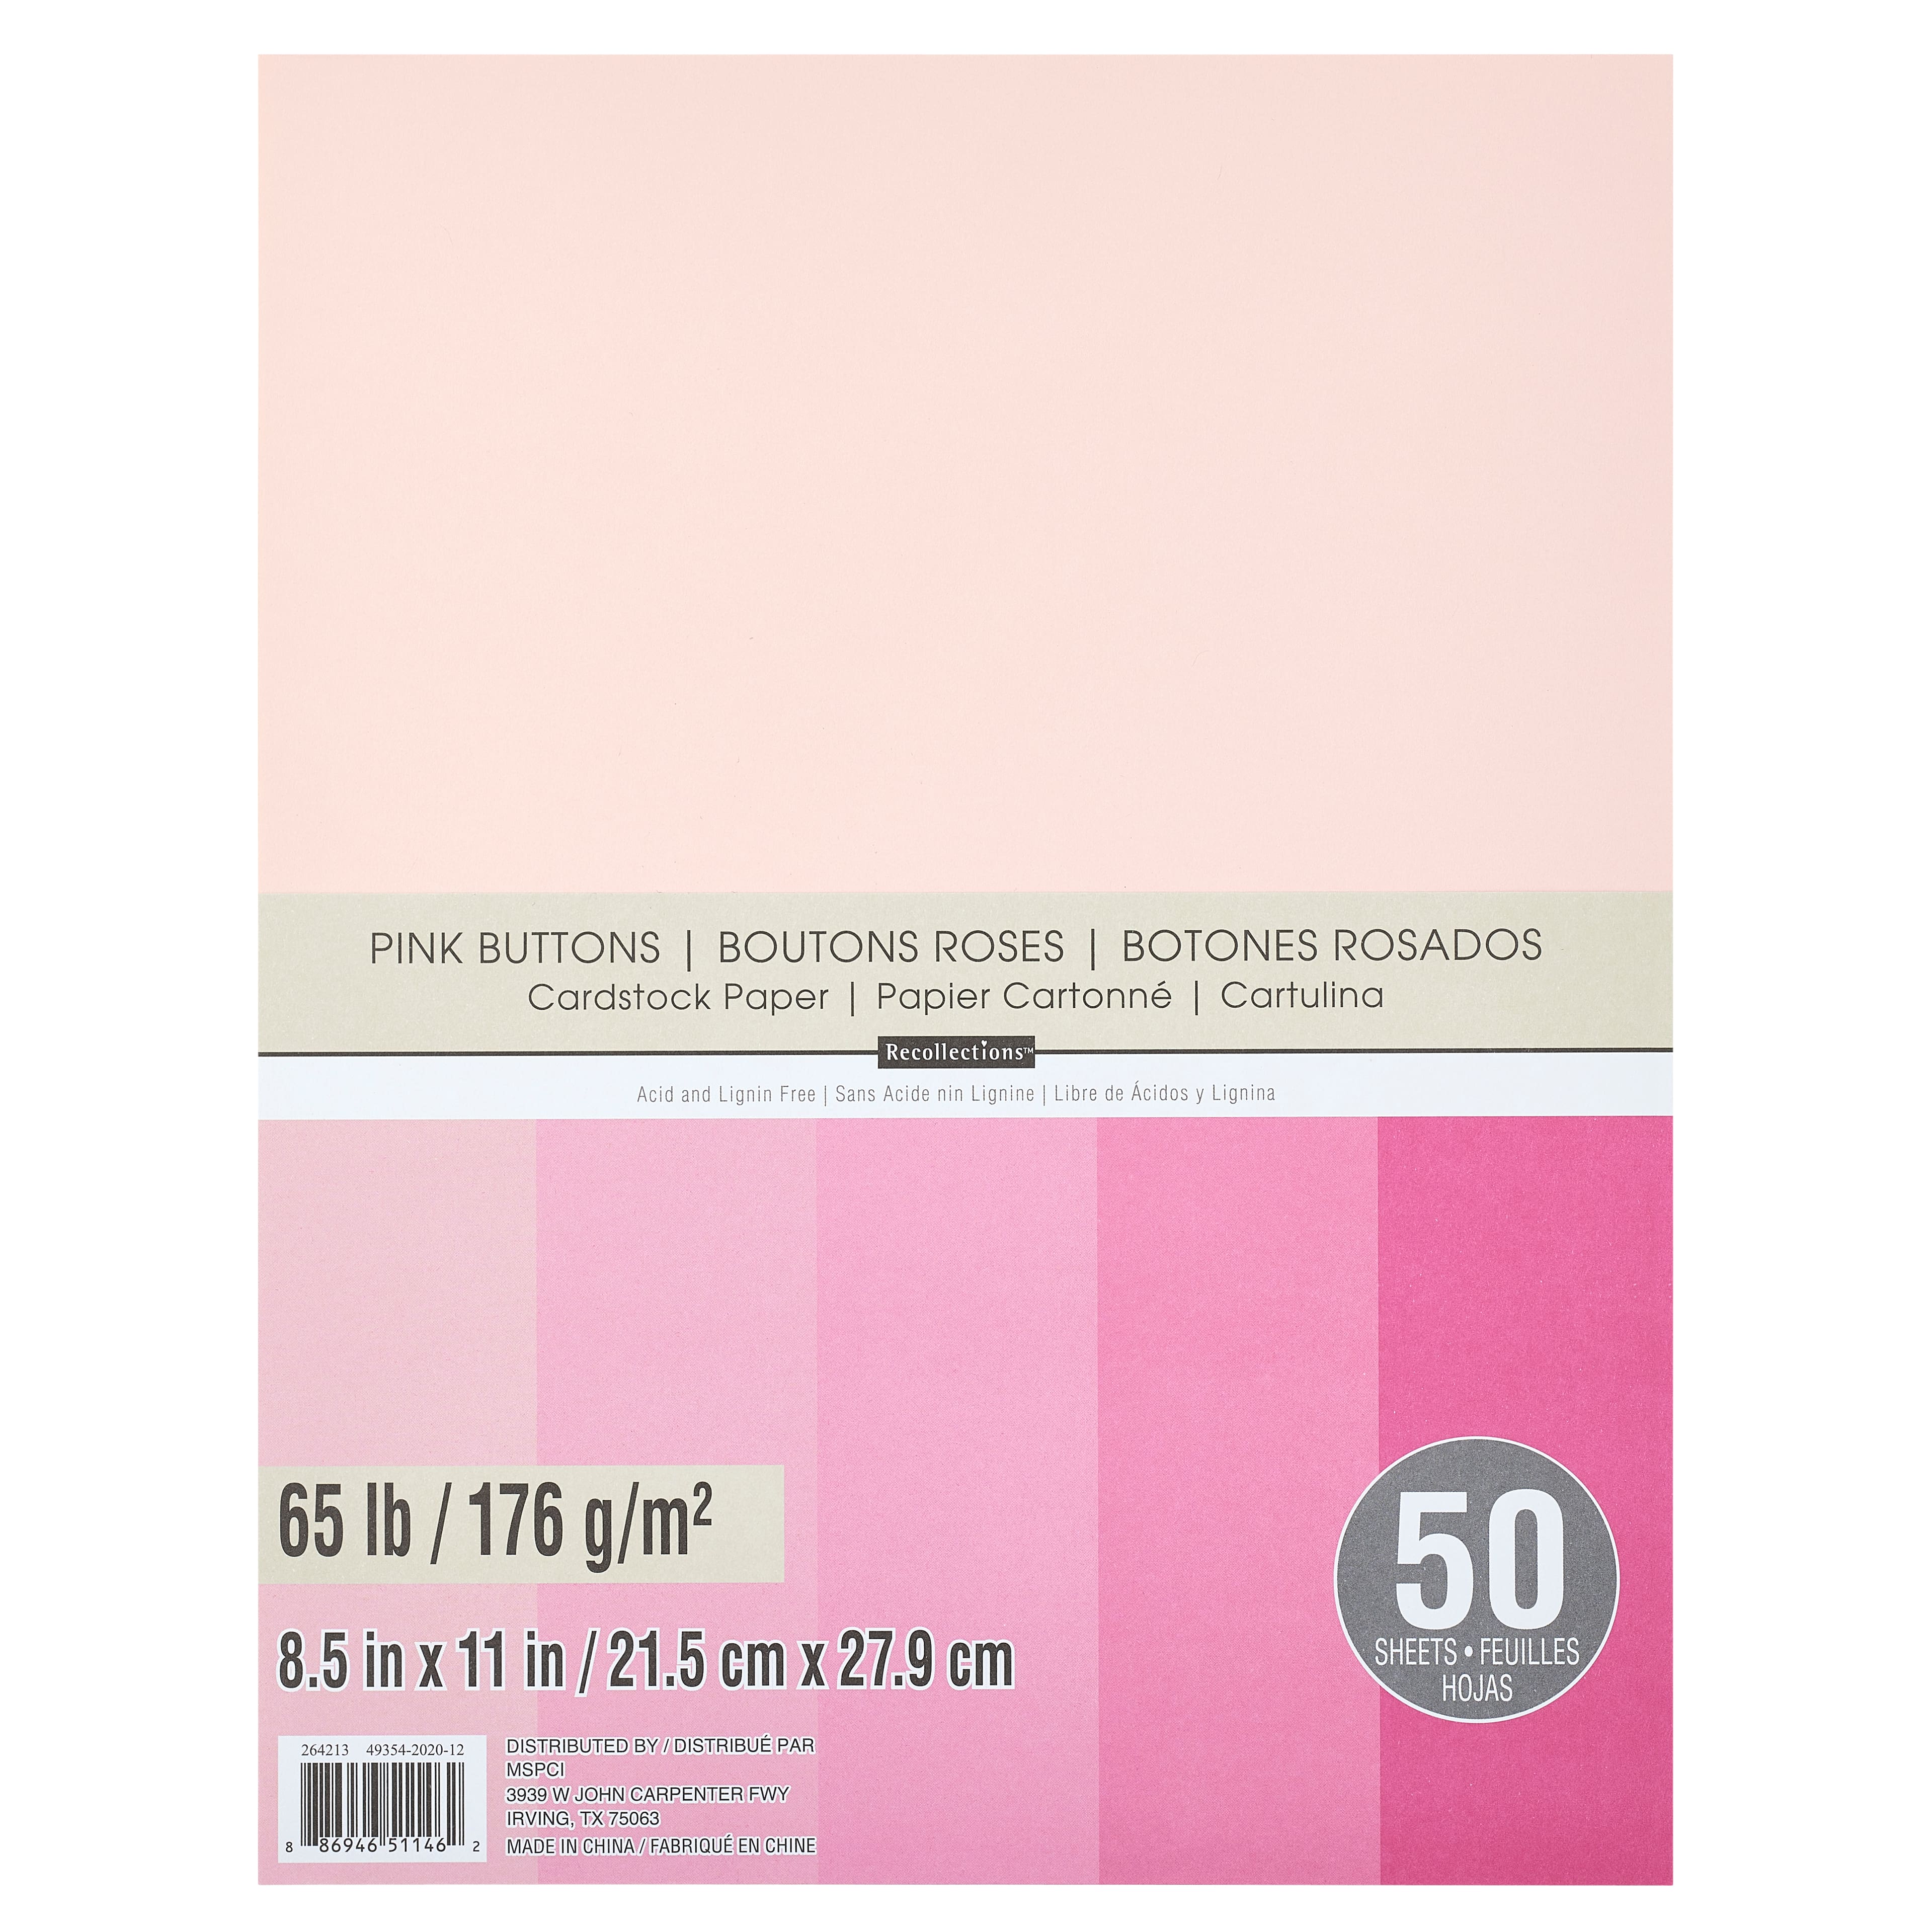 Jam Paper Matte Cardstock, 8.5 x 11, 80lb Baby Pink, 50/Pack (5155791)